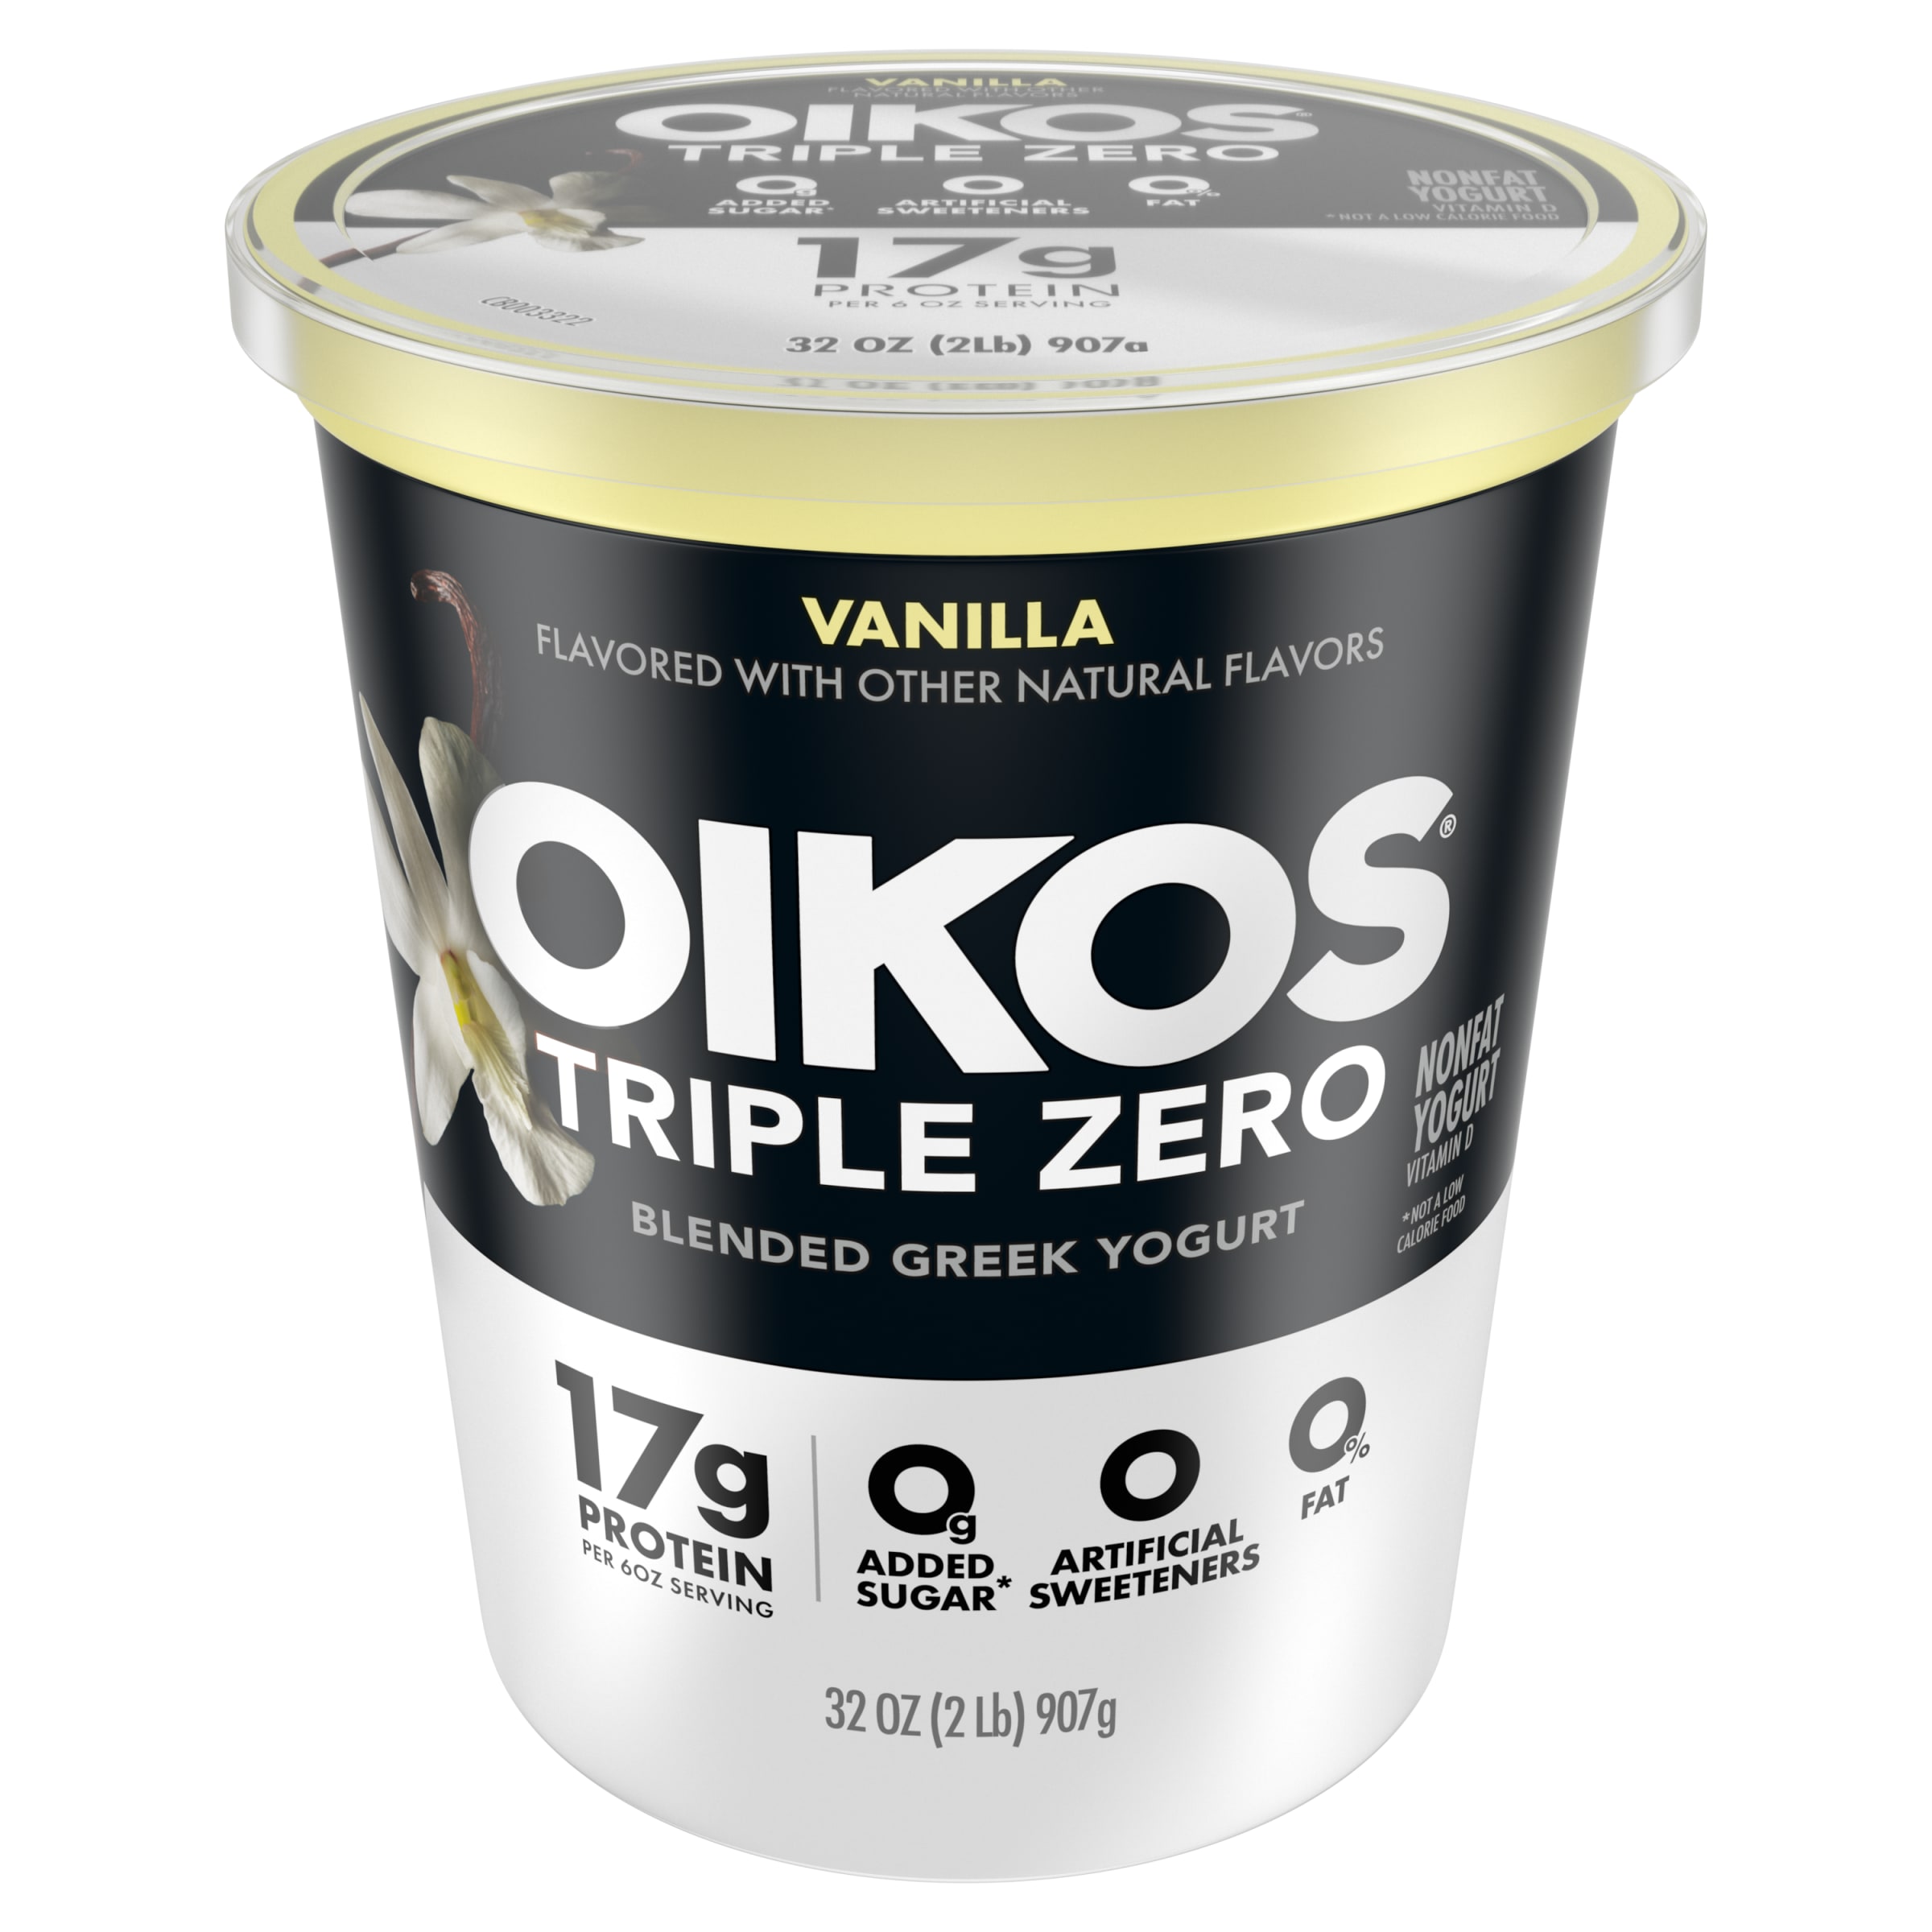 Oikos Triple Zero 17g Protein, 0g Added Sugar, Fat Free Vanilla Greek Yogurt Tub, 32 oz - image 1 of 11